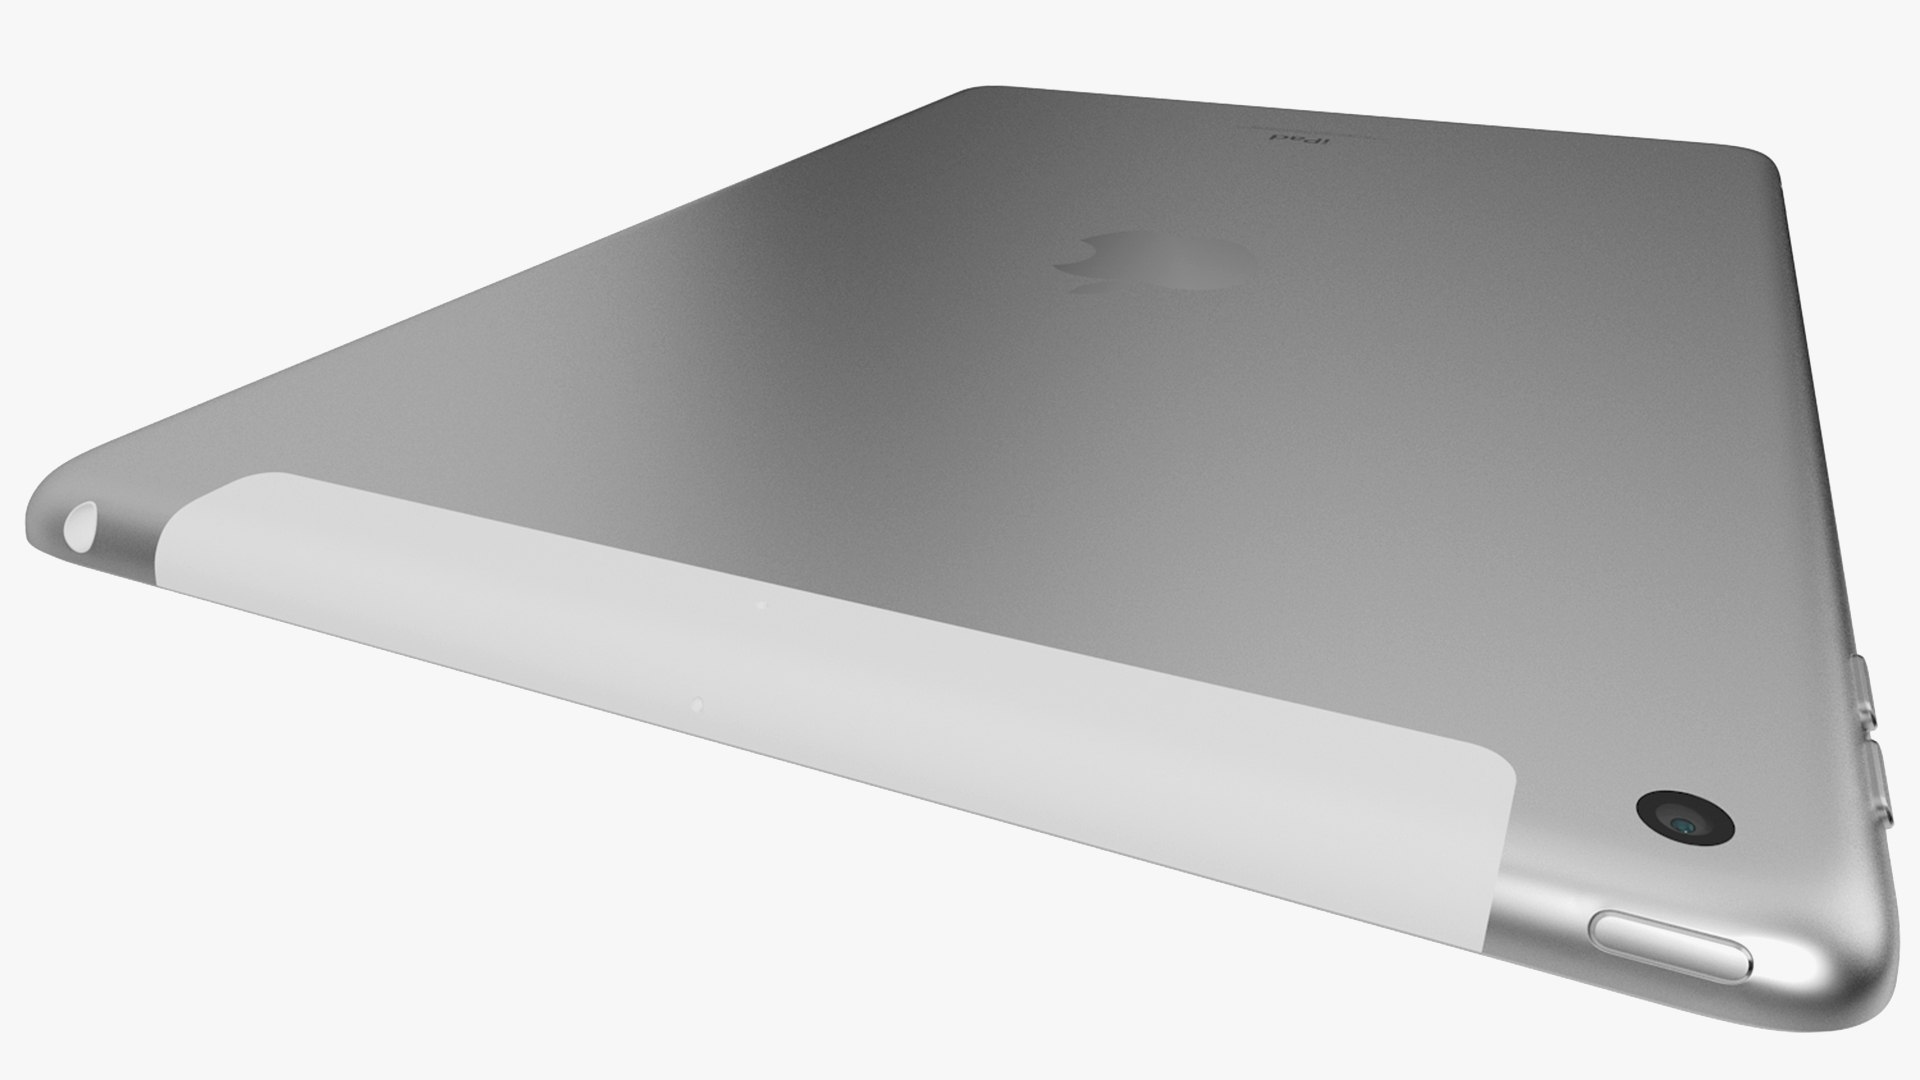 Realistic apple ipad 7 model - TurboSquid 1482021